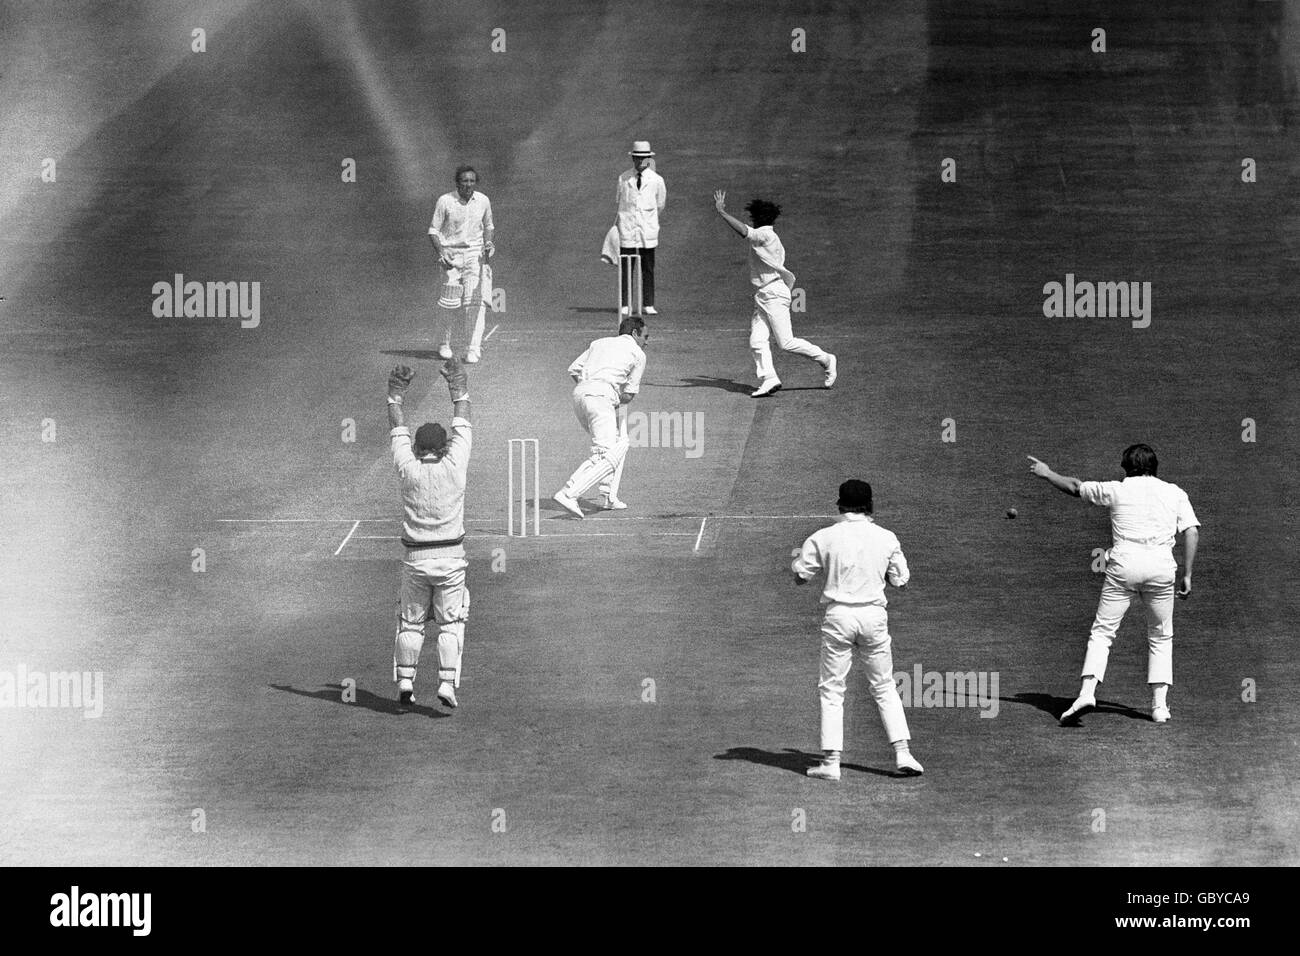 Cricket - The Ashes - Fourth Test - England v Australia - Third Day Stock Photo